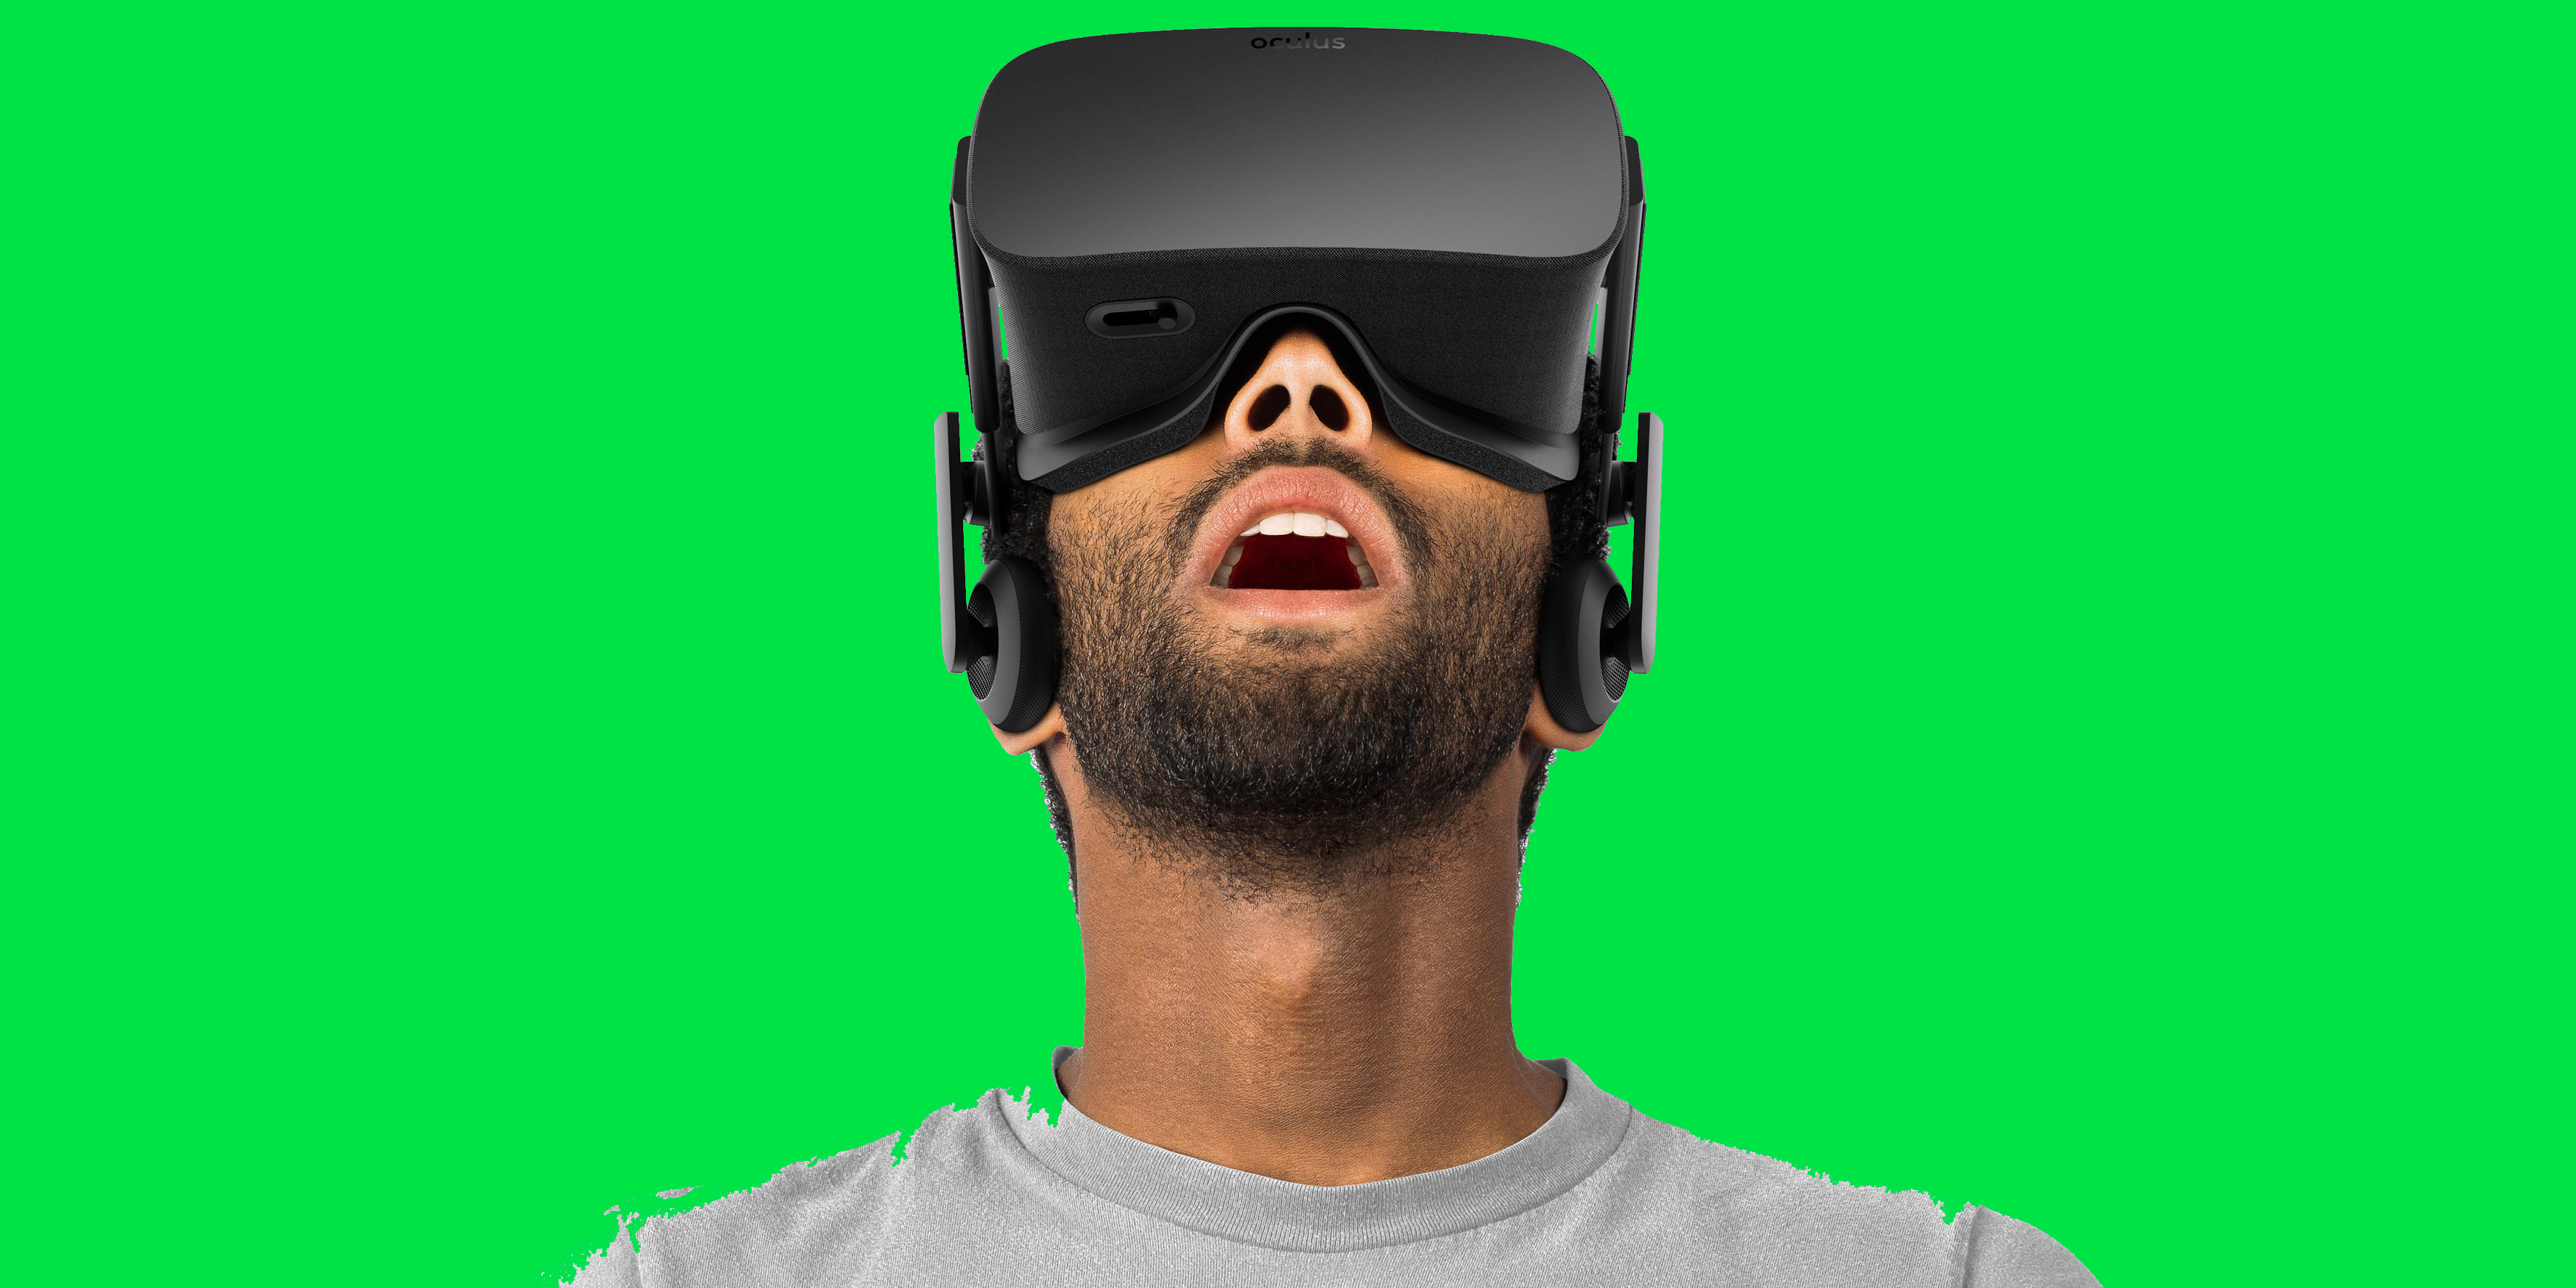 Эпл виар очки. VR шлем Окулус. Очки Окулус рифт. Гир виар очки. Очки виртуальной реальности Oculus 2017.